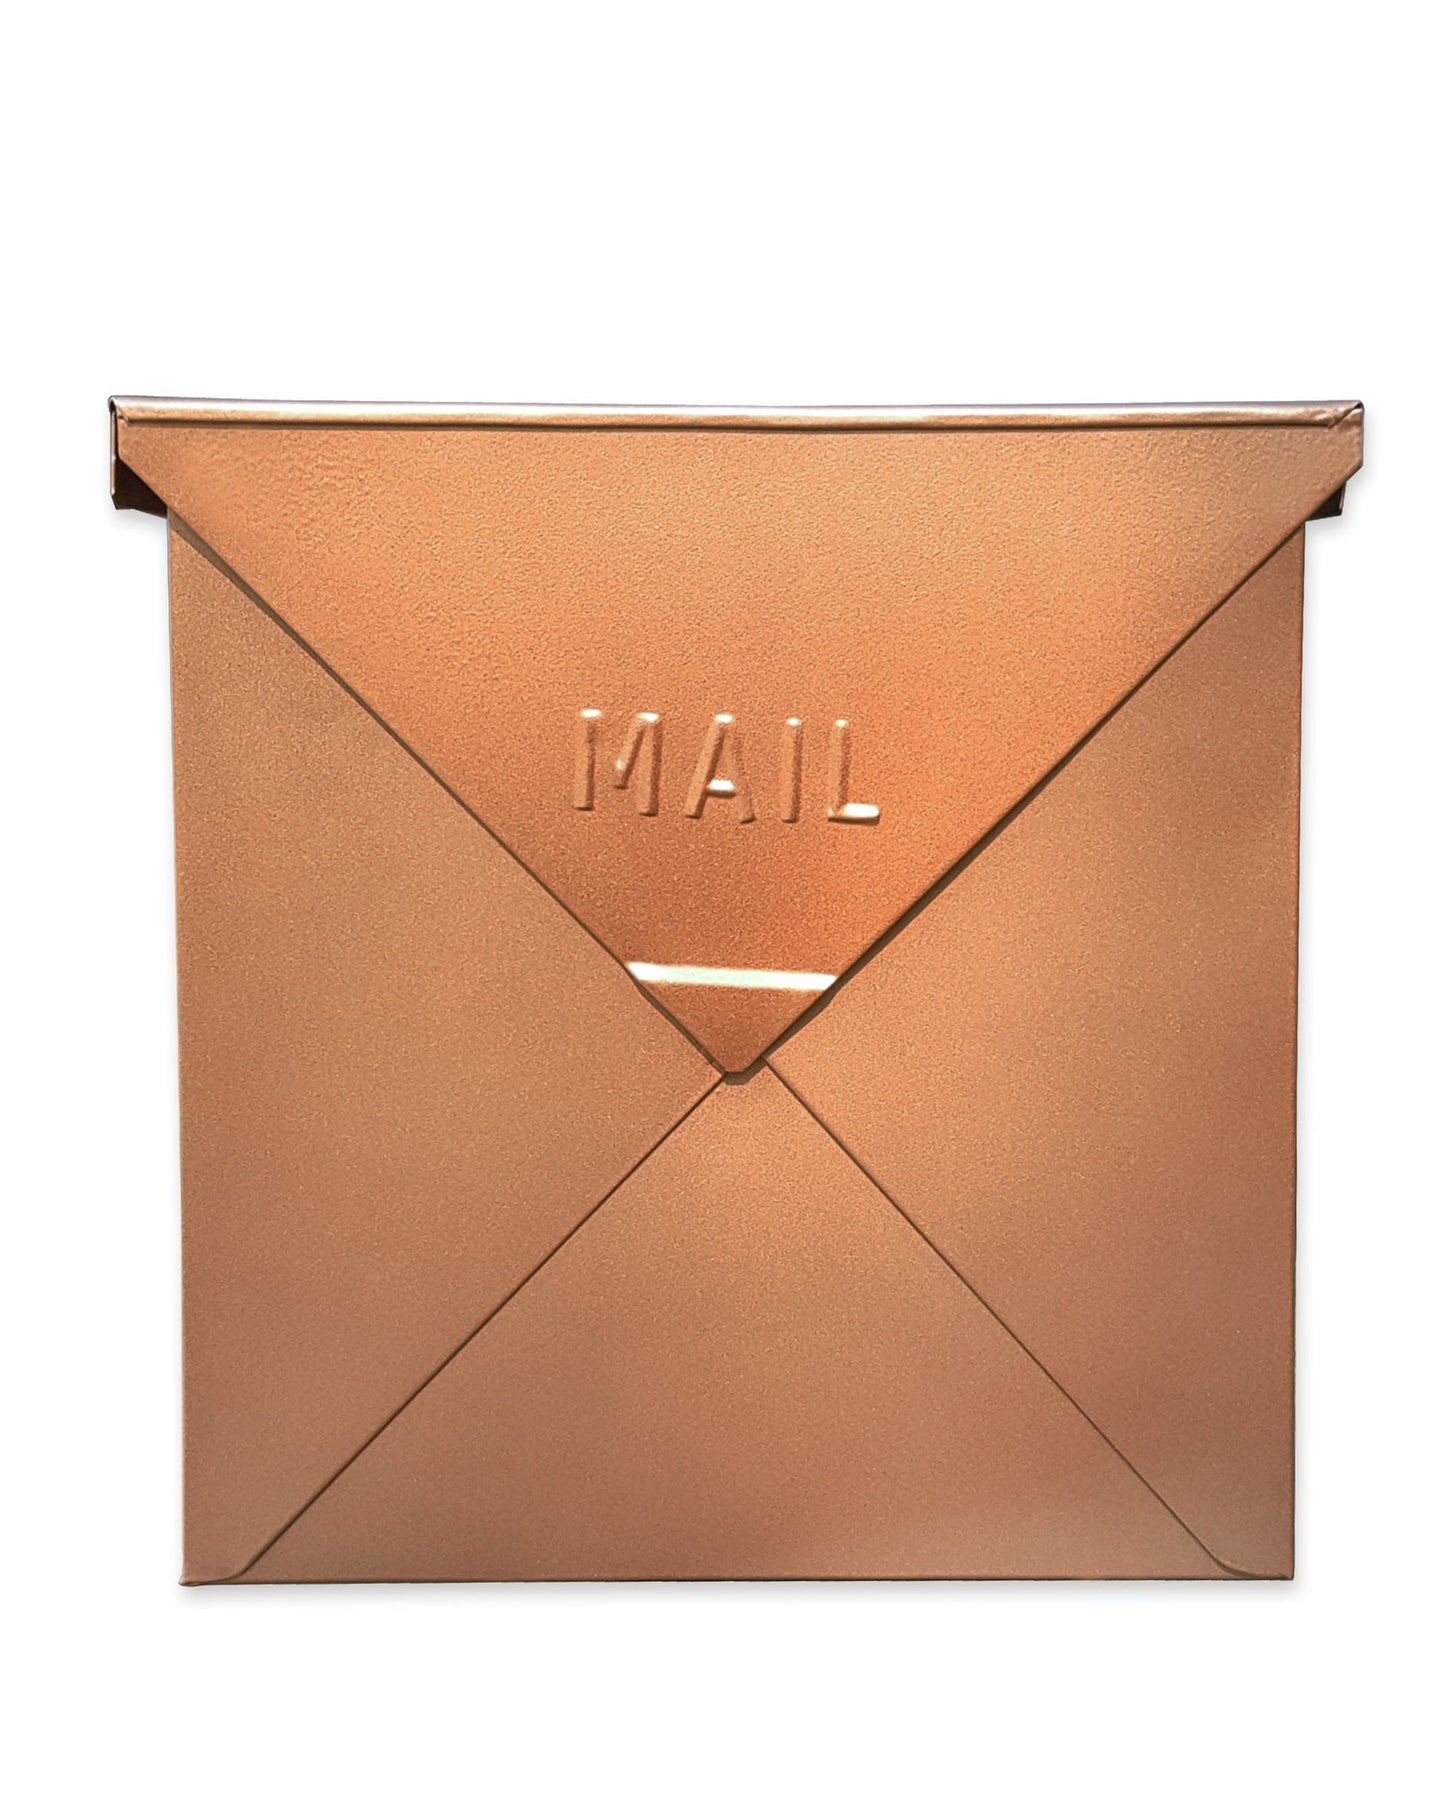 Chicago Copper Mailbox, Last Chance